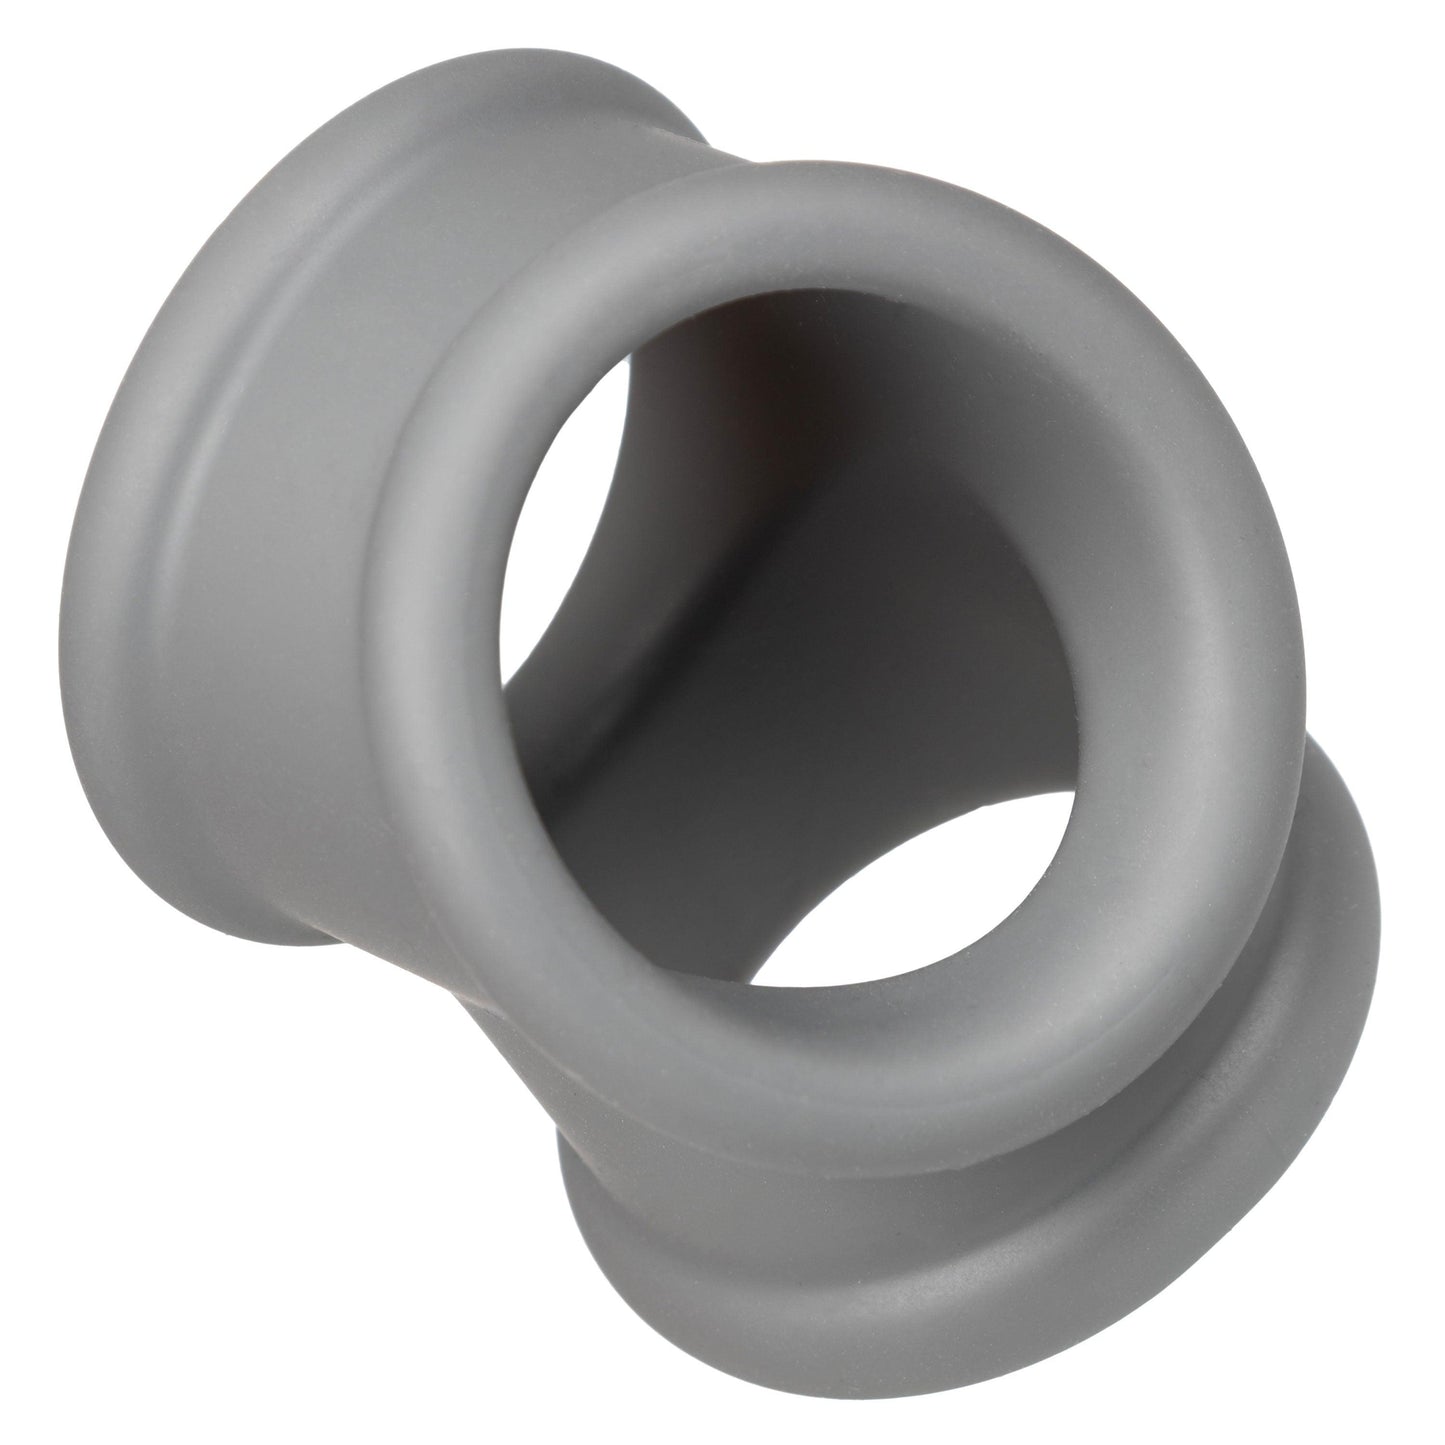 Alpha Liquid Silicone Precision Ring - Gray - My Sex Toy Hub